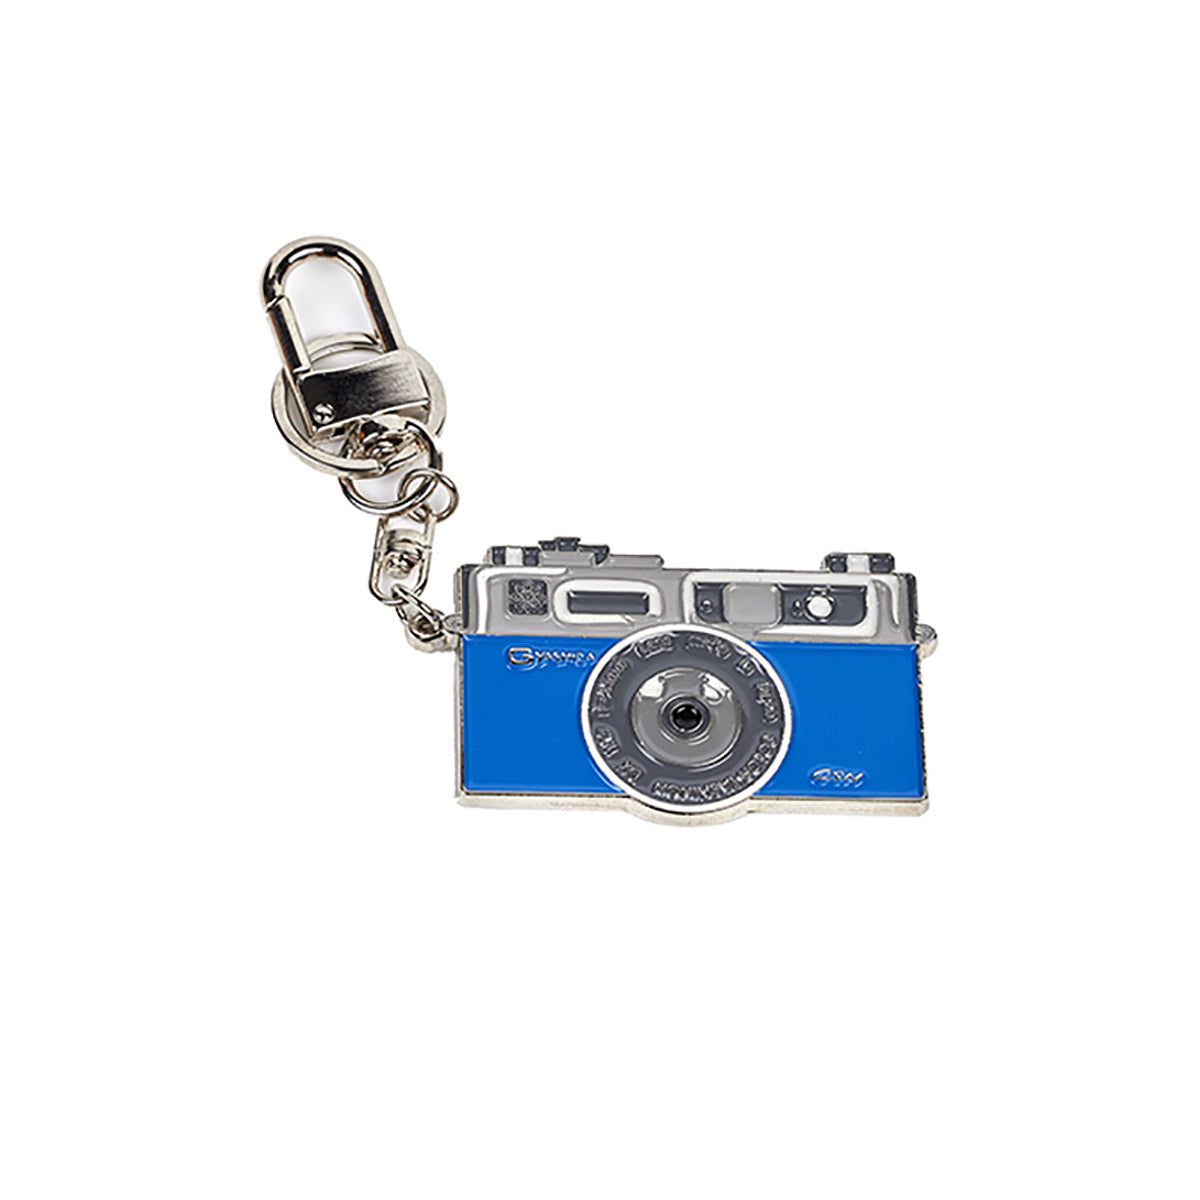 YASHICA Electro 35 Keychain 鑰匙圈 (黑/灰/藍)(Black/Grey/Blue)